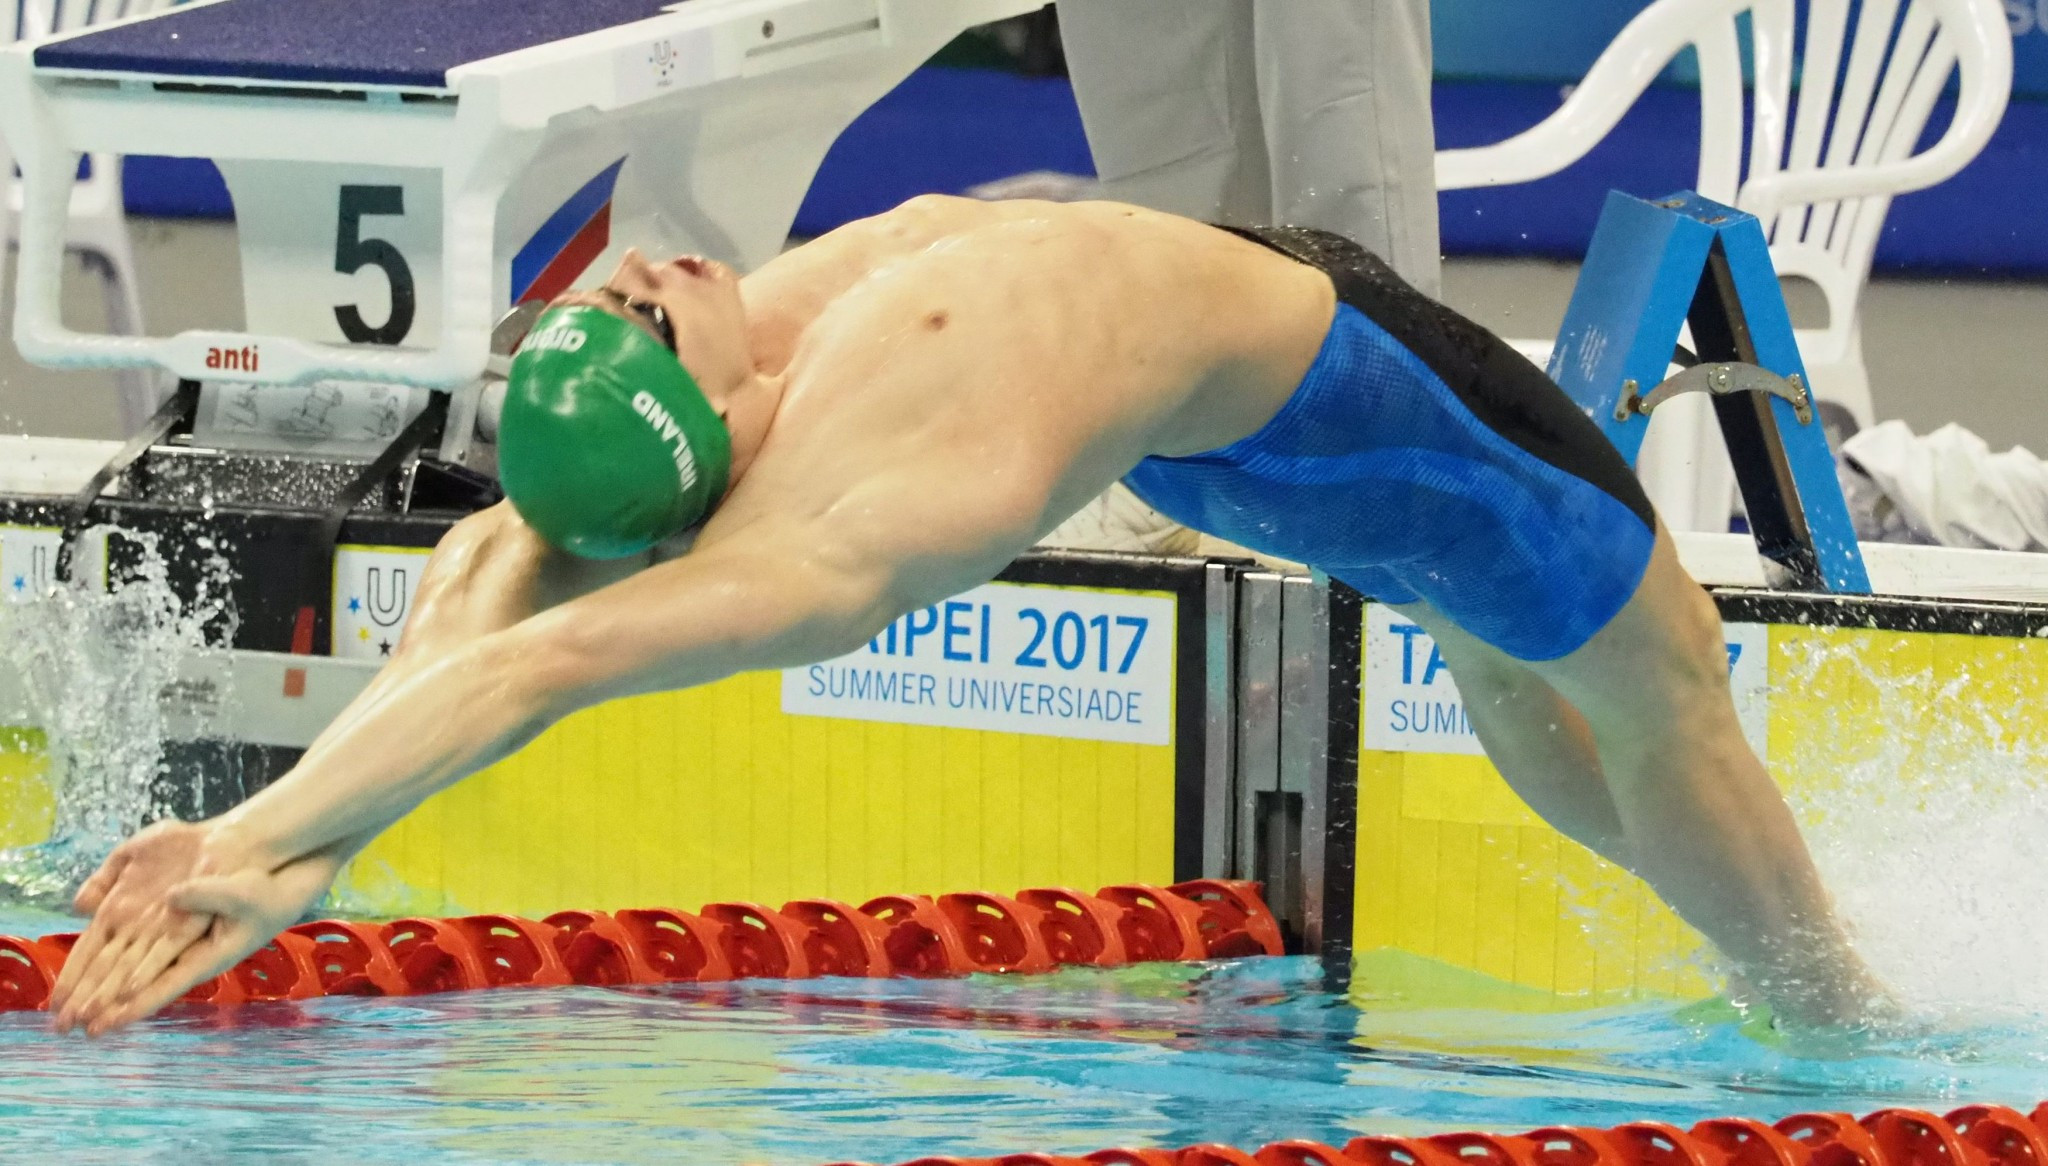 Ireland claimed their first medal of Taipei 2017 with Shane Ryan winning the men's 50m backstroke ©Taipei 2017